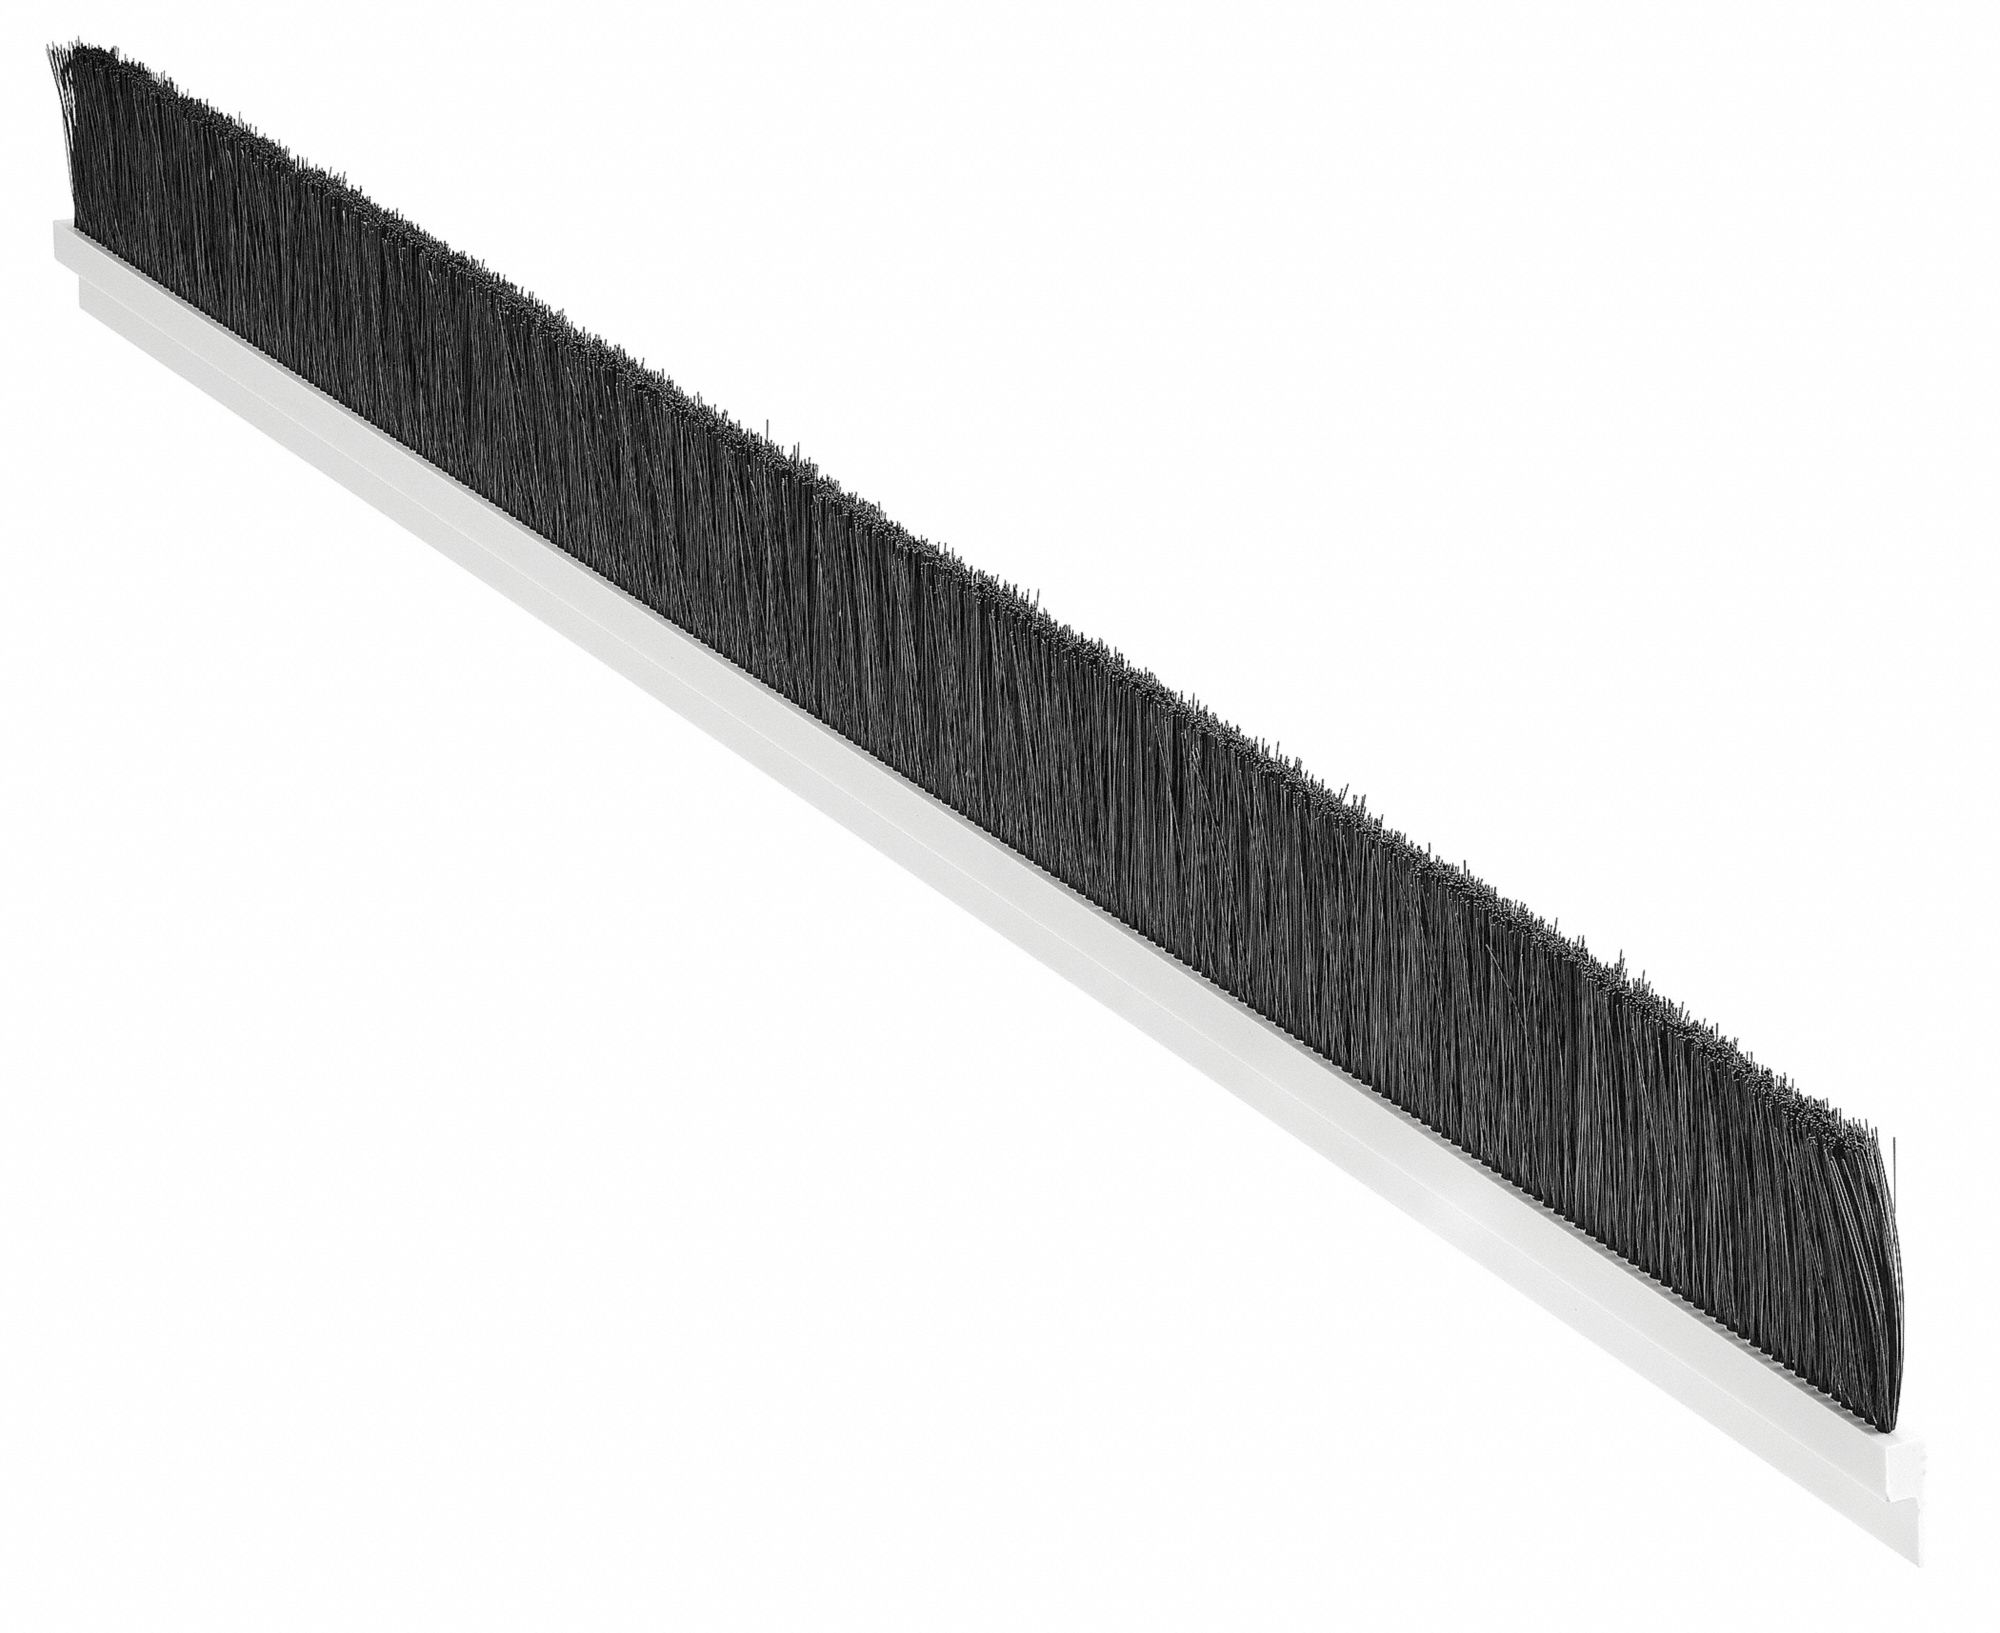 12 Overall Length 2 Trim Length Tanis Brush MB402412 3/16 Stainless Steel Backed Strip Brush with Crimped Black Nylon Bristles 0.014 Bristle Diameter 